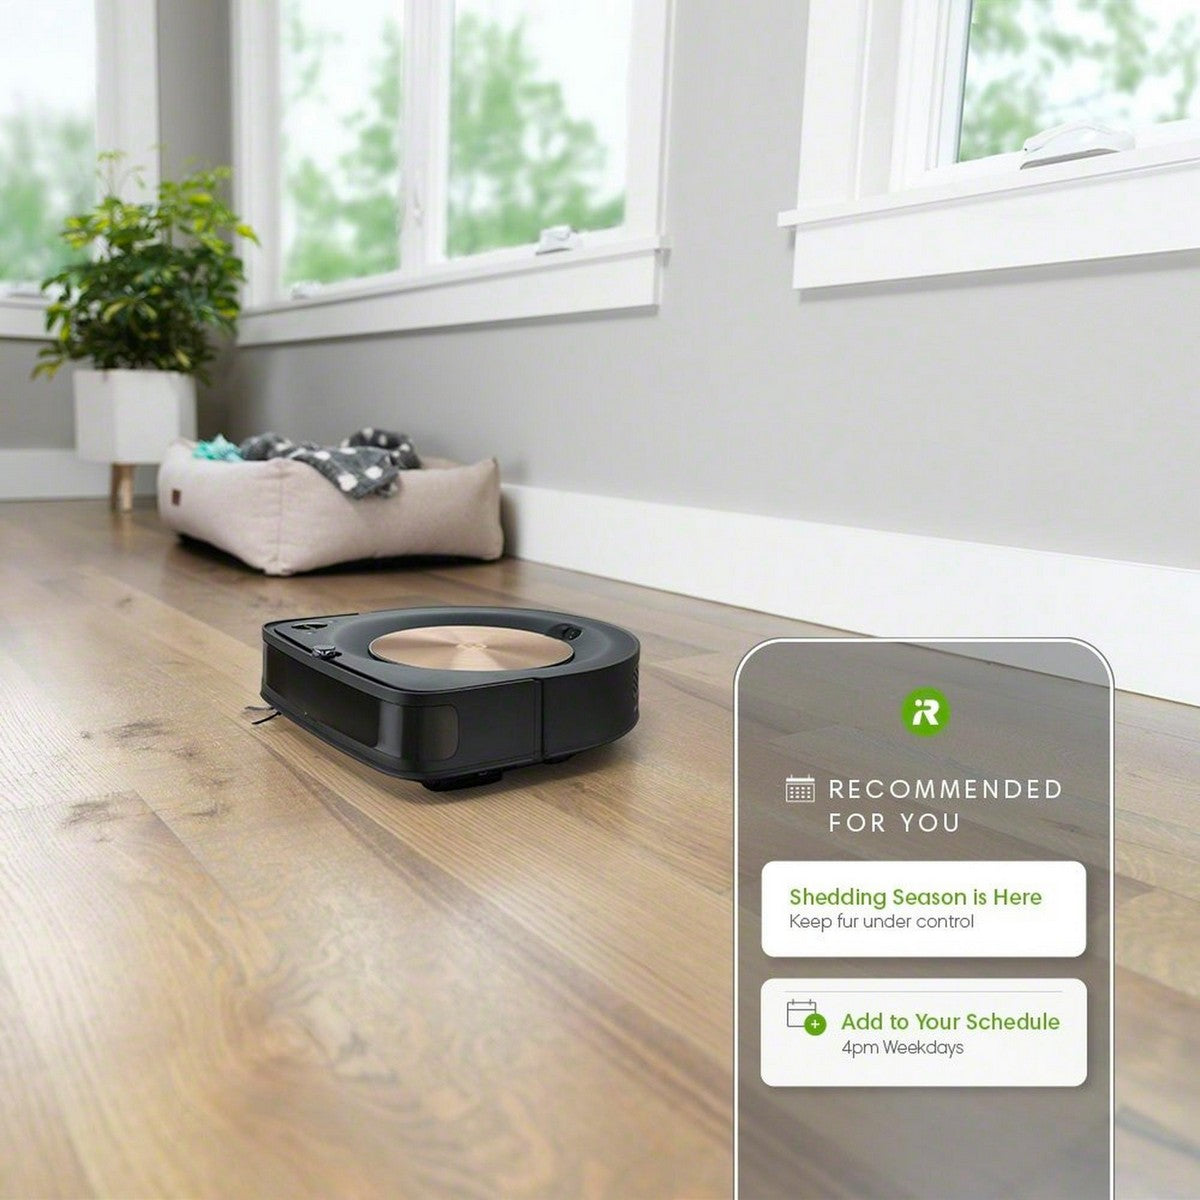 iRobot-Roomba-s9_-Self-Emptying-Robot-Vacuum-listing-tips